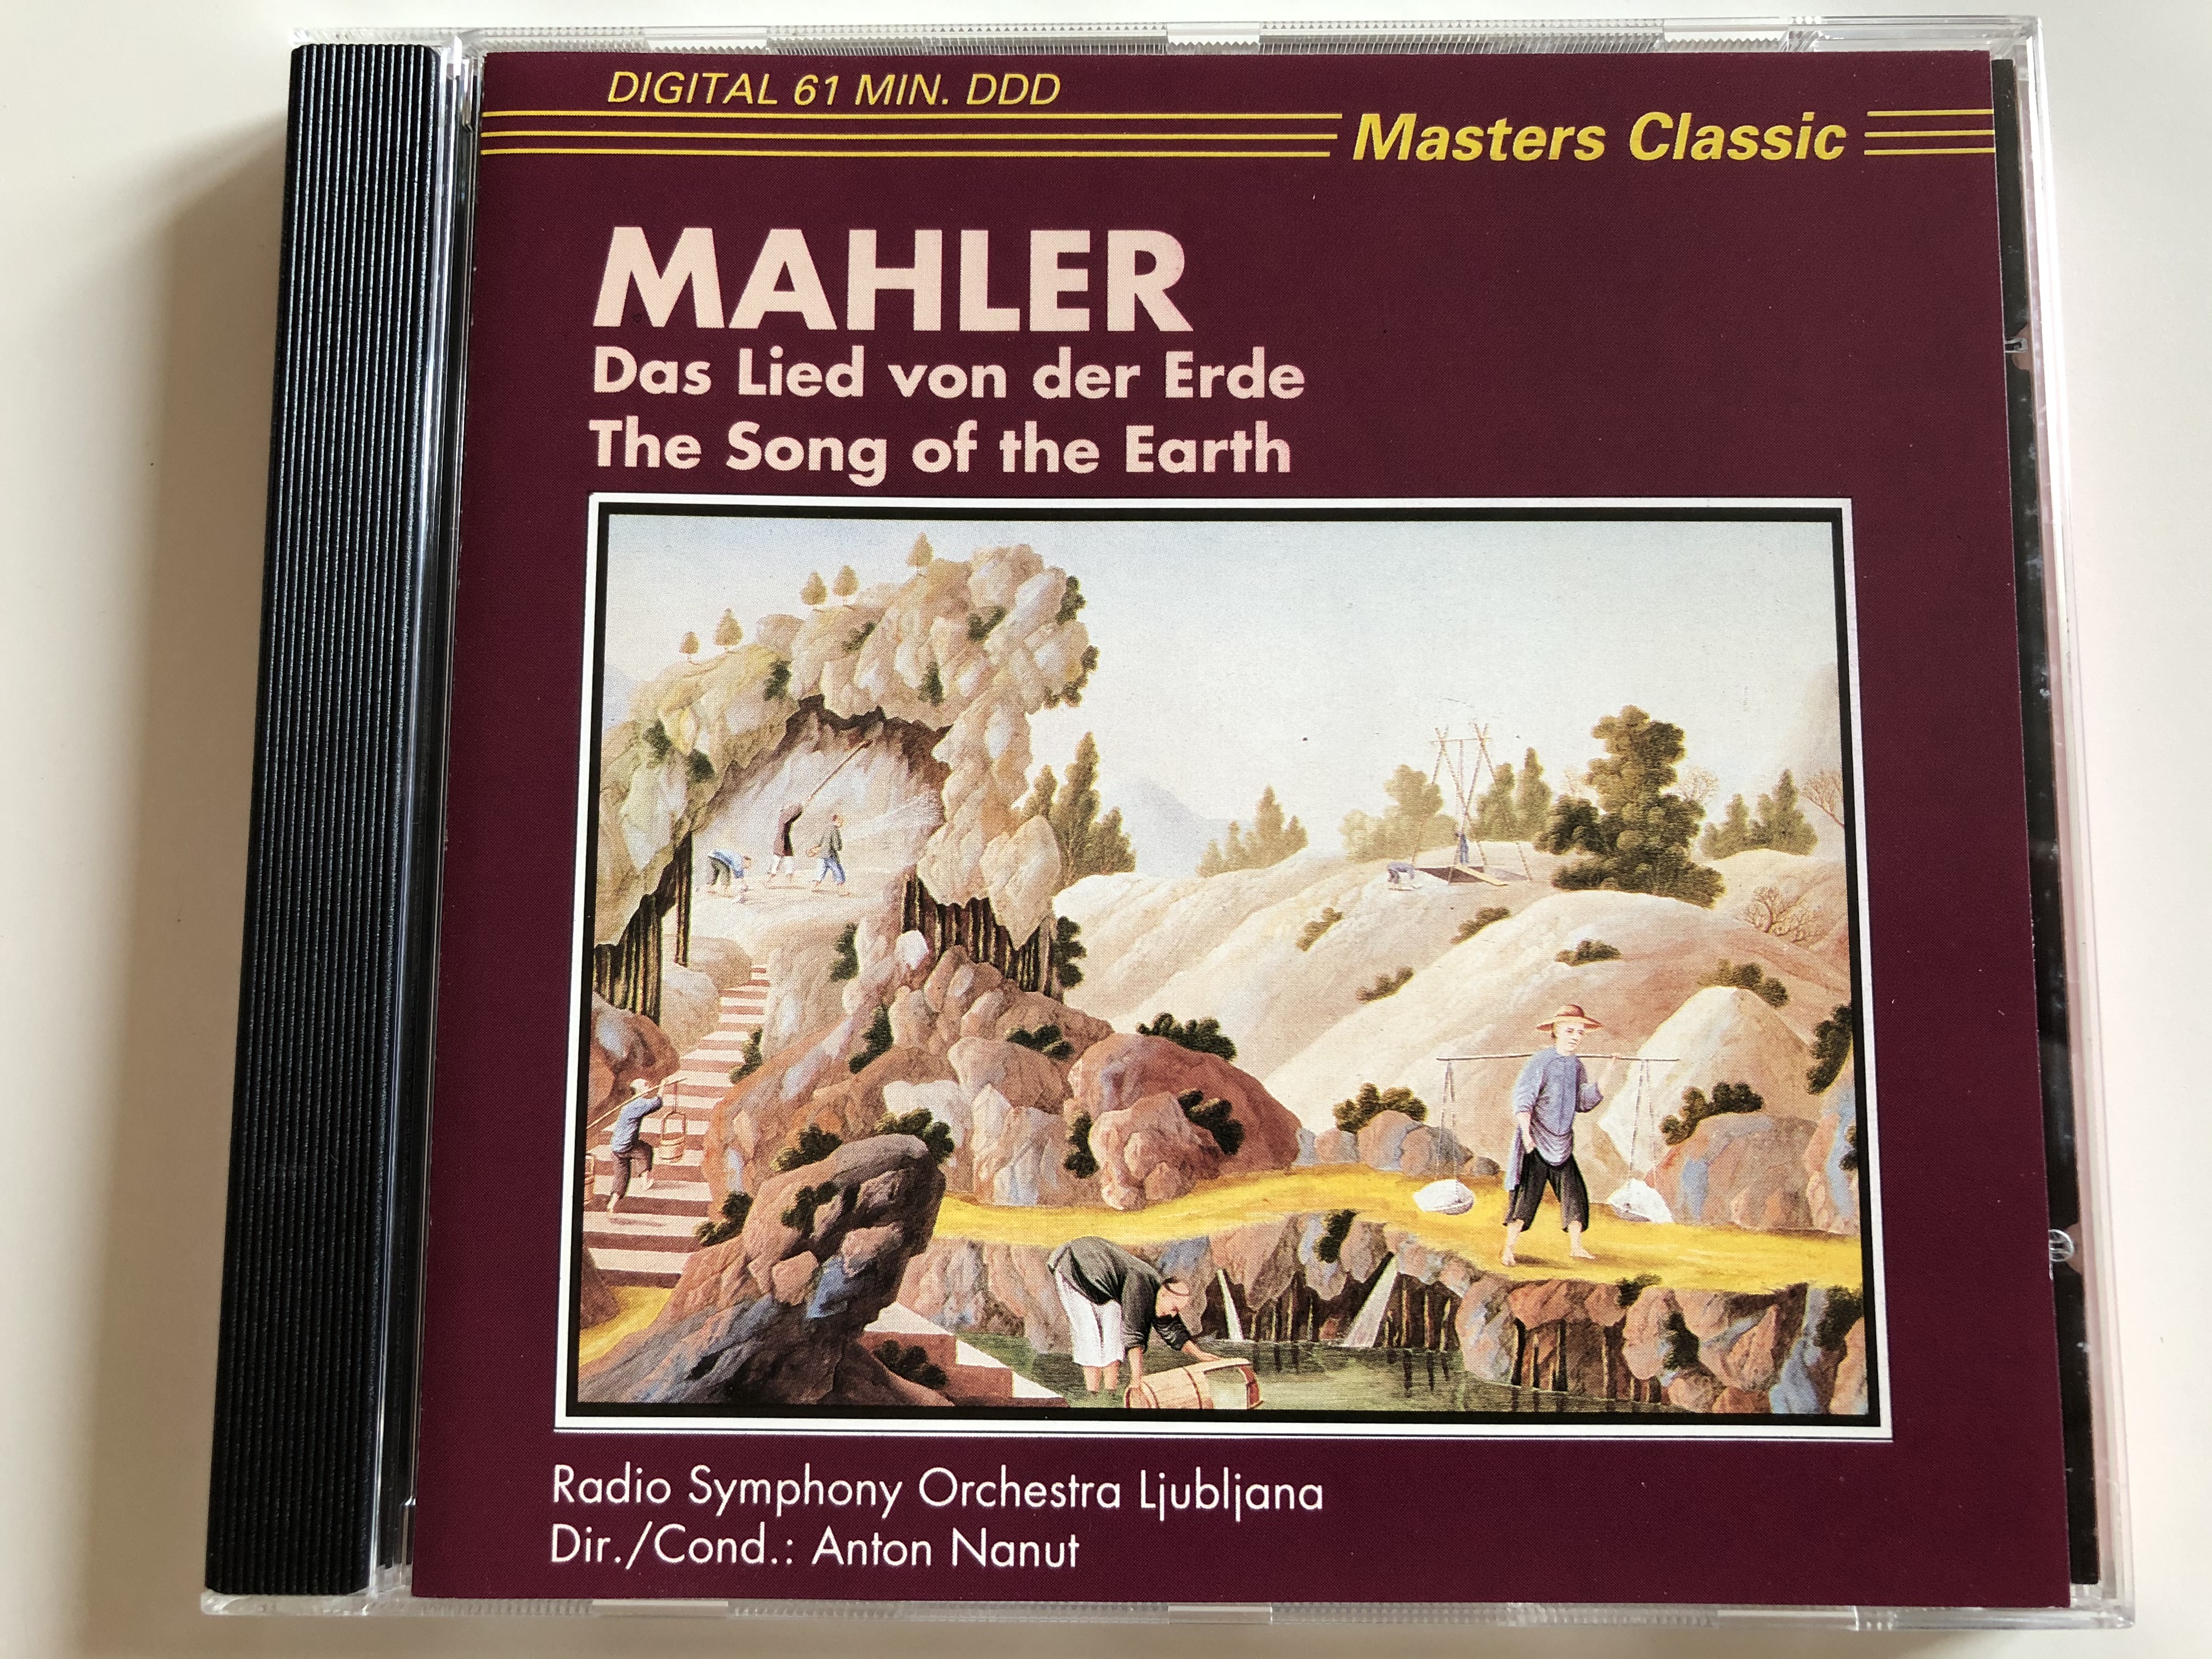 mahler-das-lied-von-der-erde-the-song-of-the-earth-radio-symphony-orchestra-ljubljana-anton-nanut-masters-classic-audio-cd-cls-4111-1-.jpg